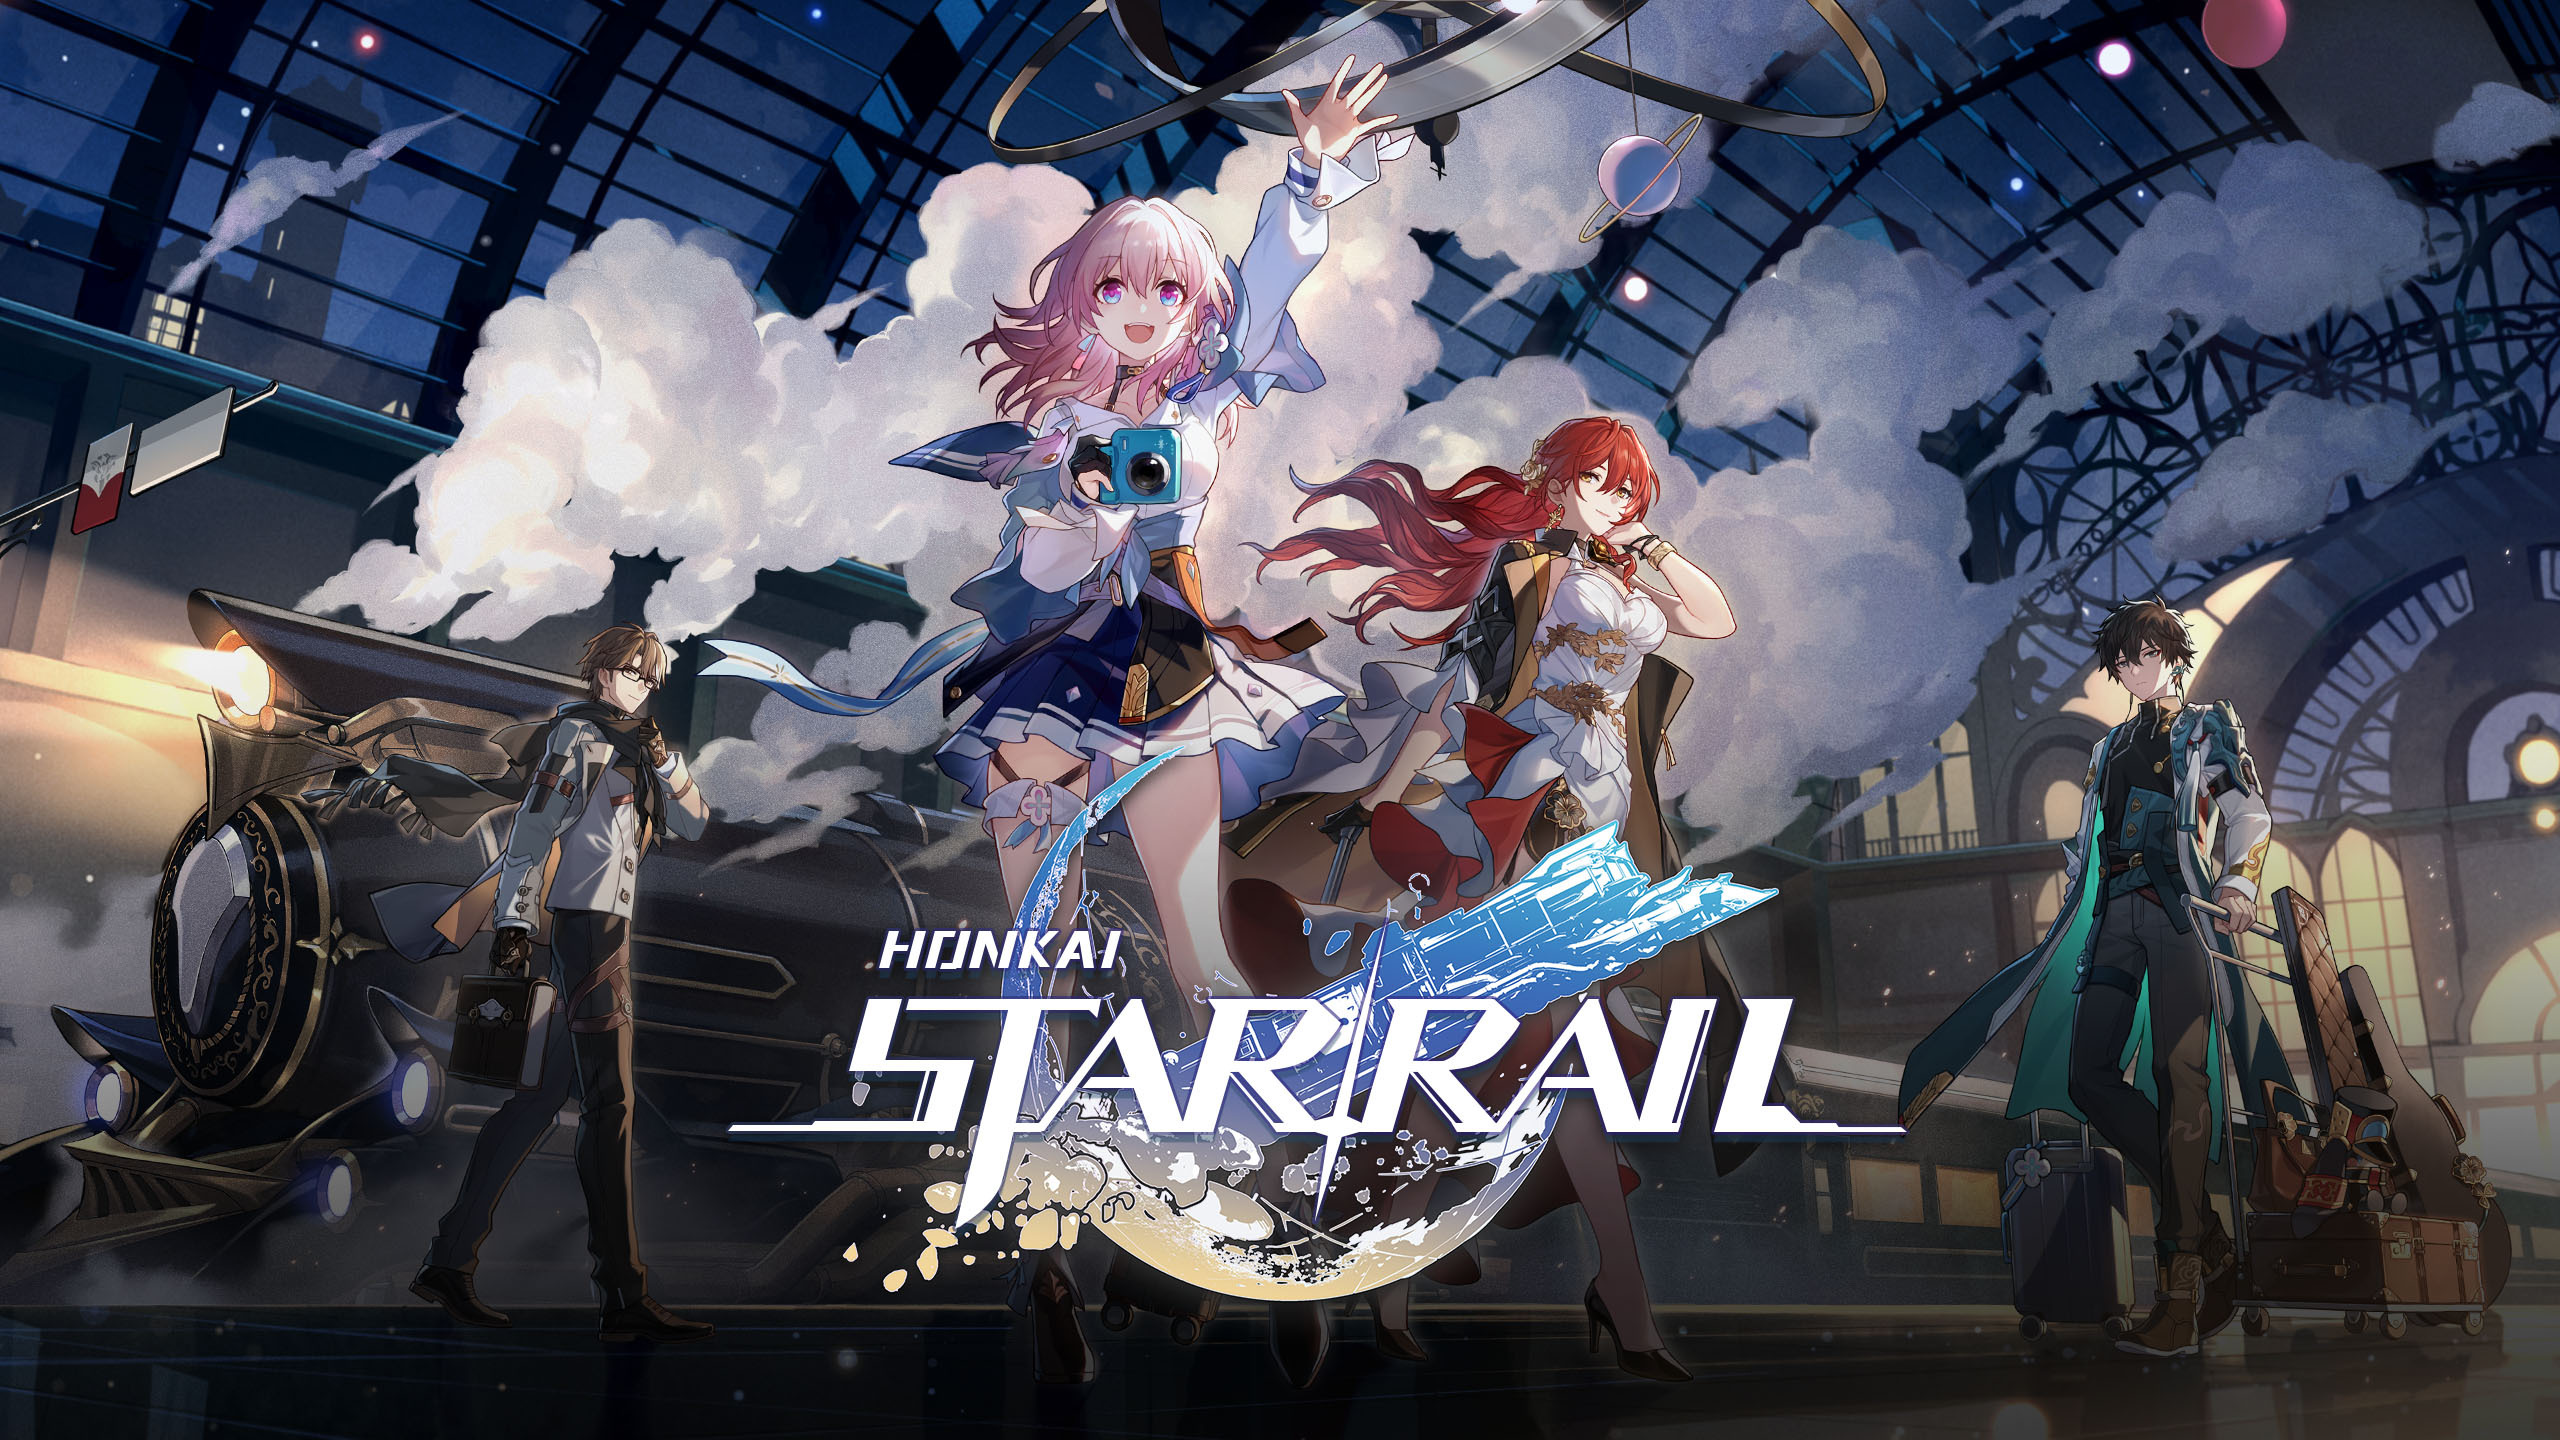 honkai star rail next banner leak